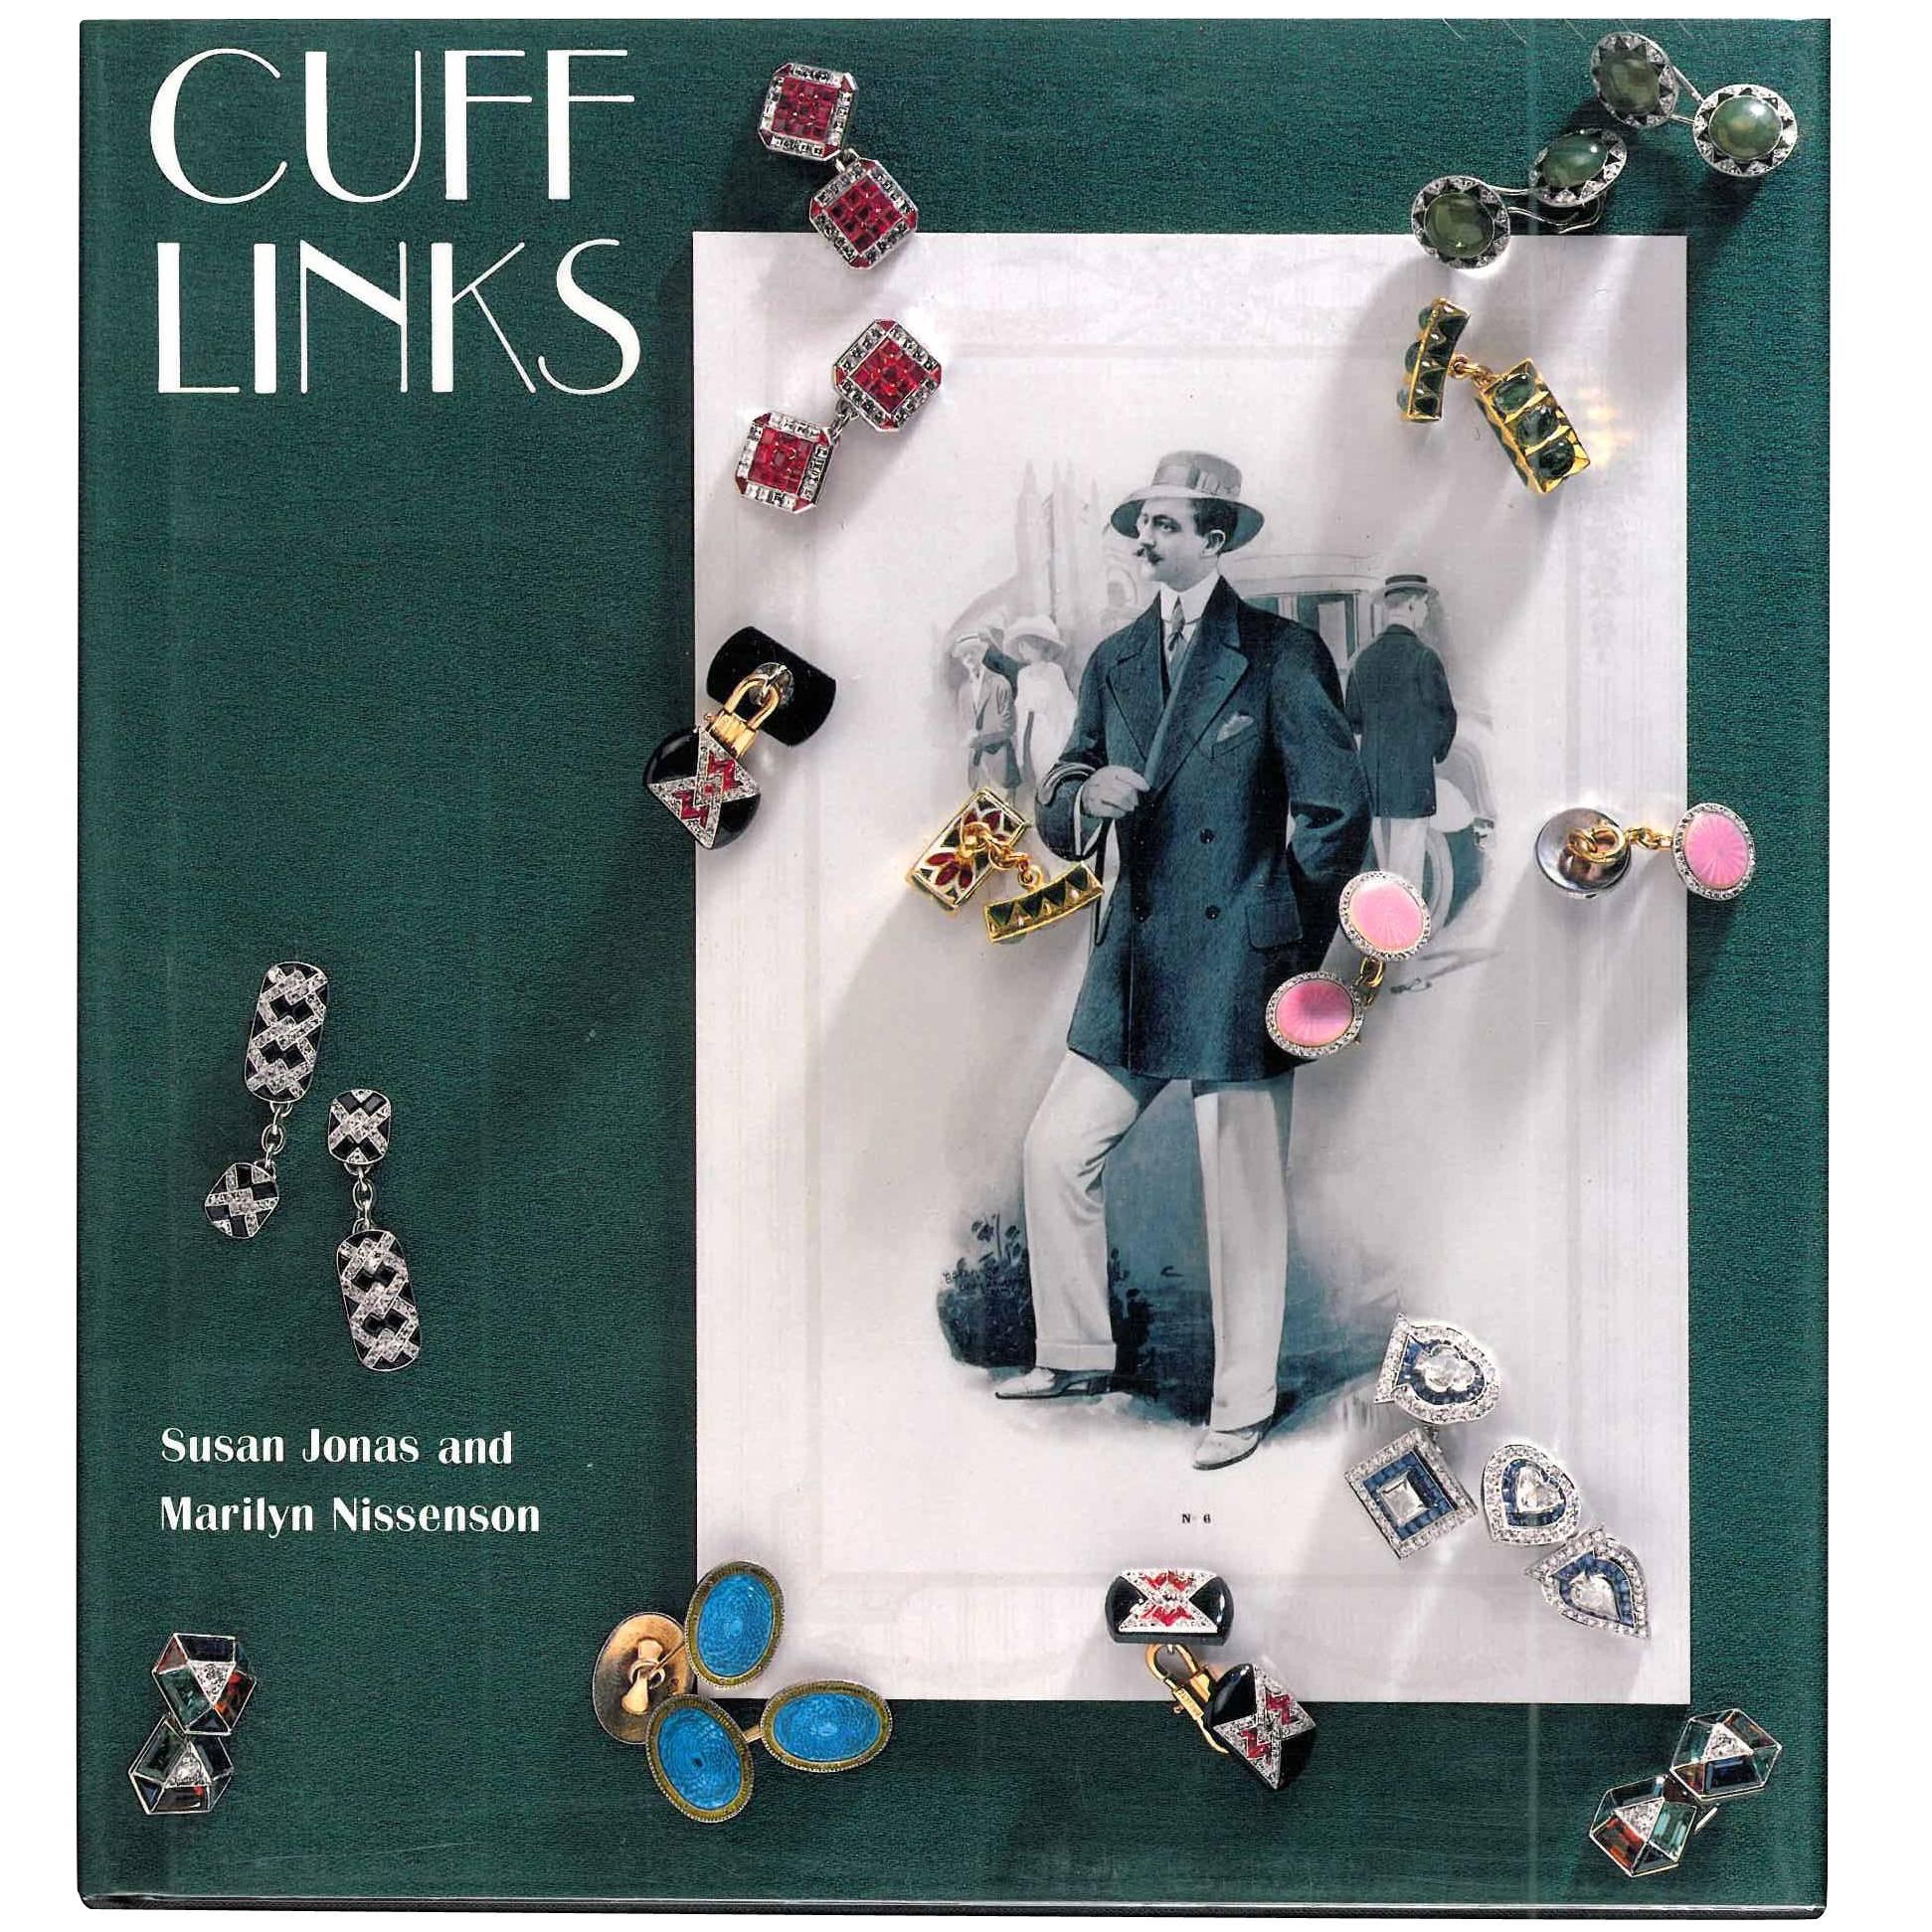 Book of Cuff Links